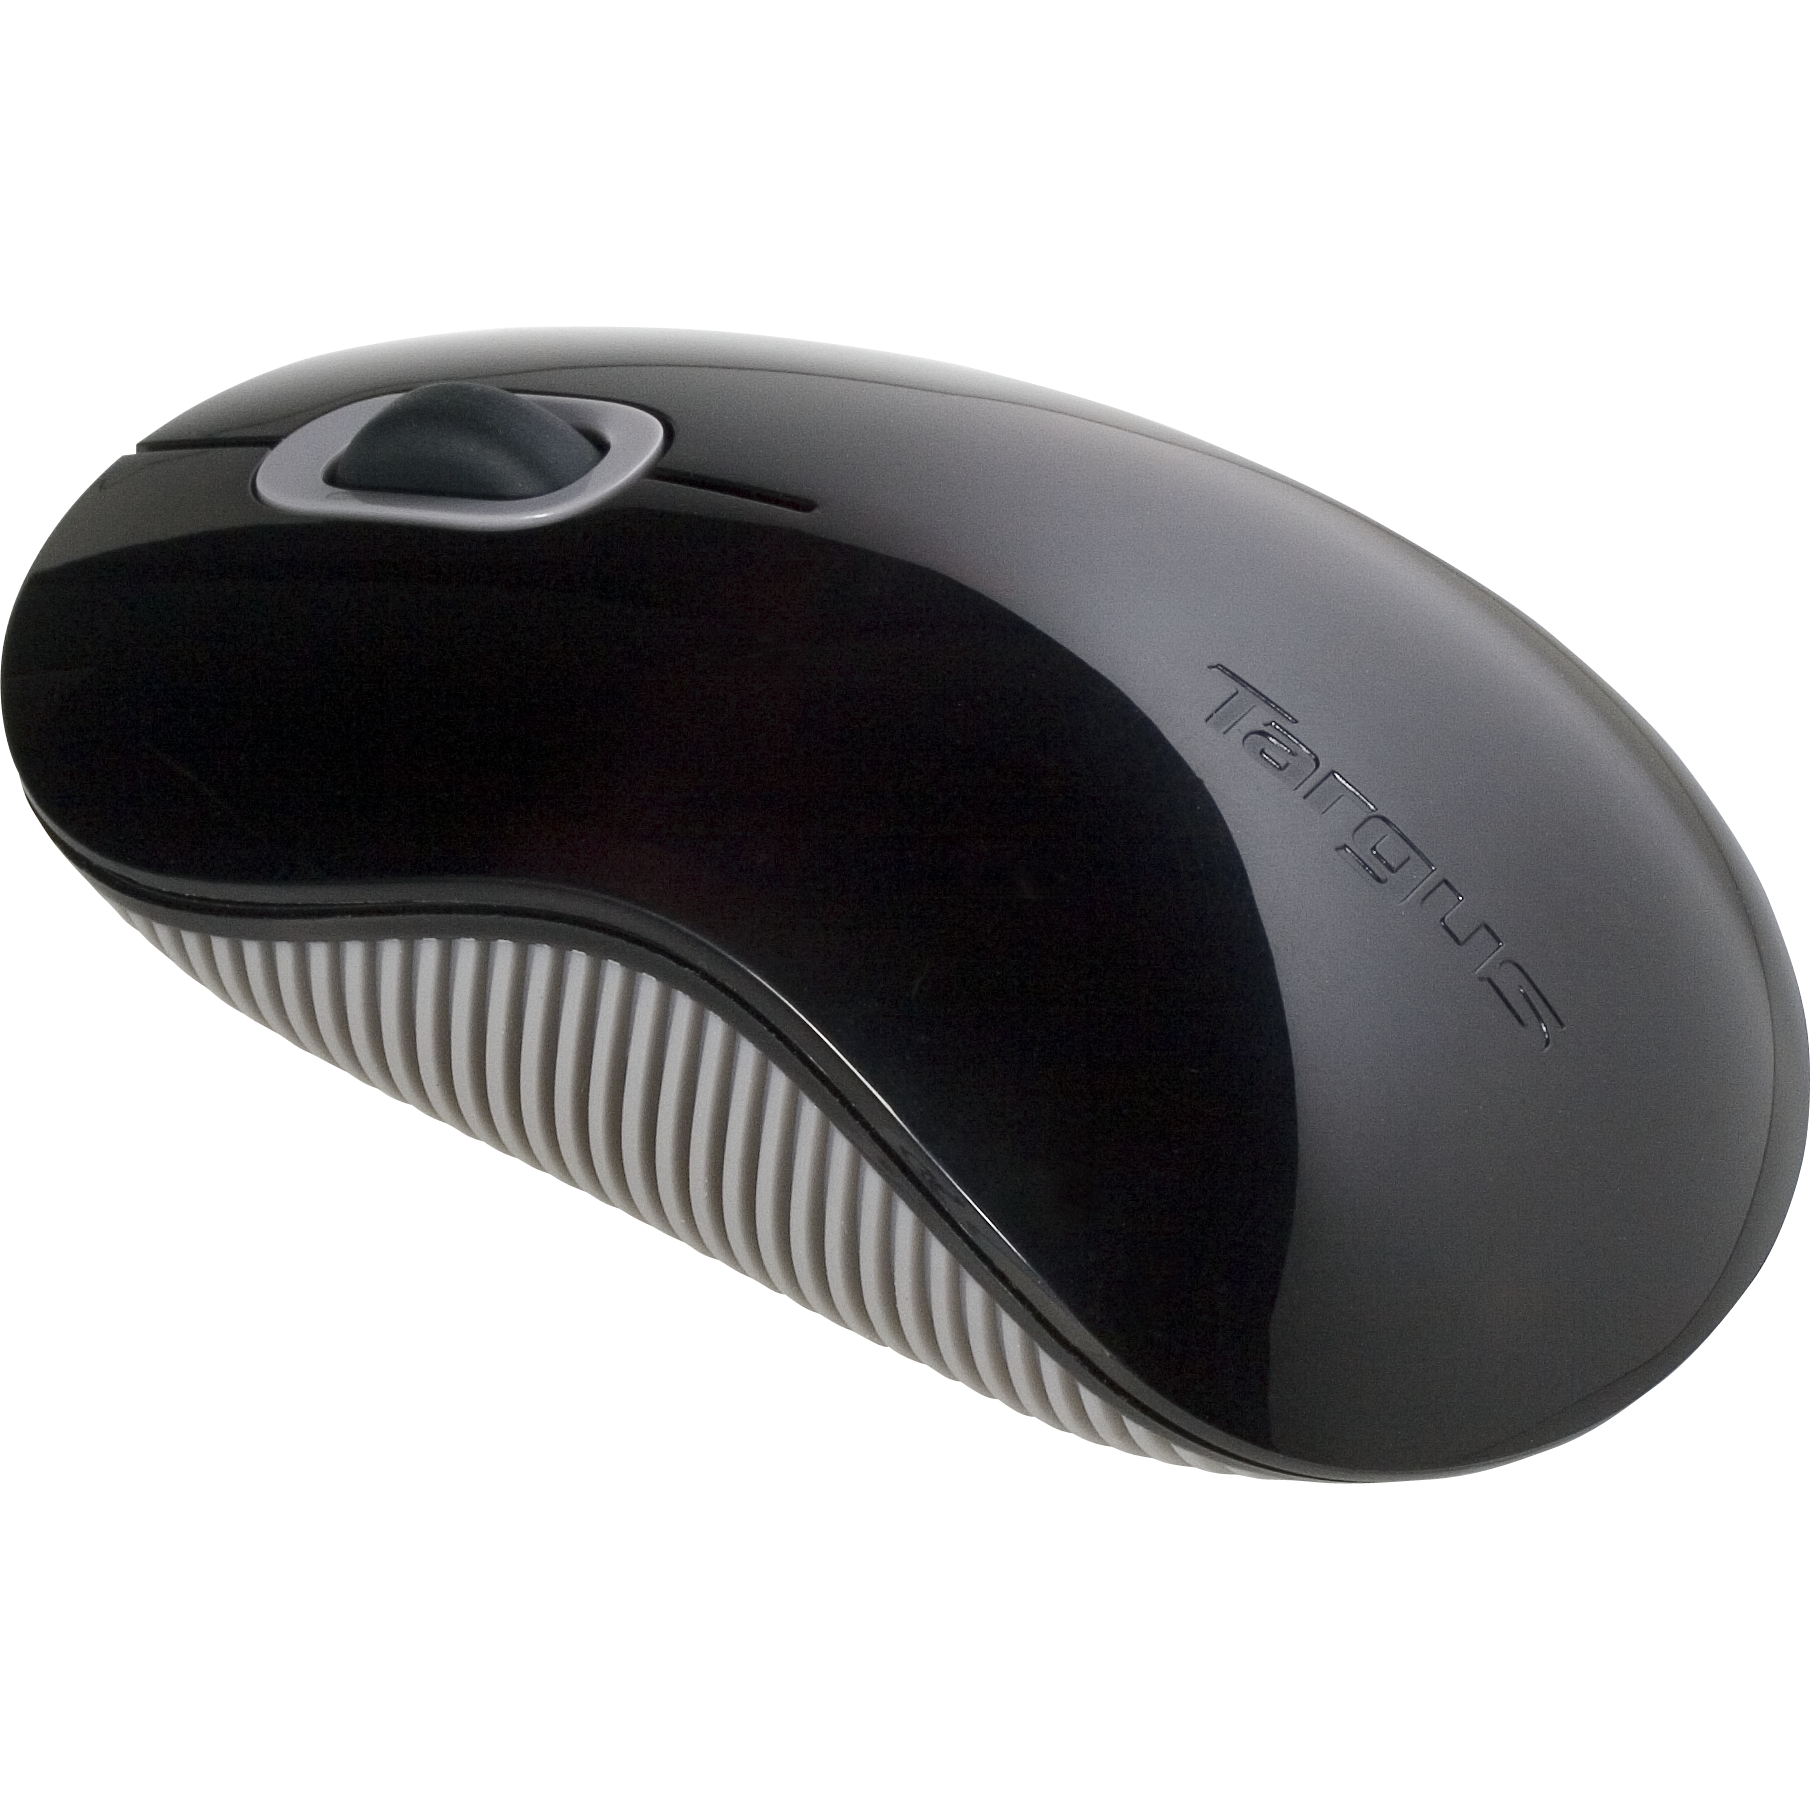 Targus Bluetooth Comfort Laser Mouse Windows 7